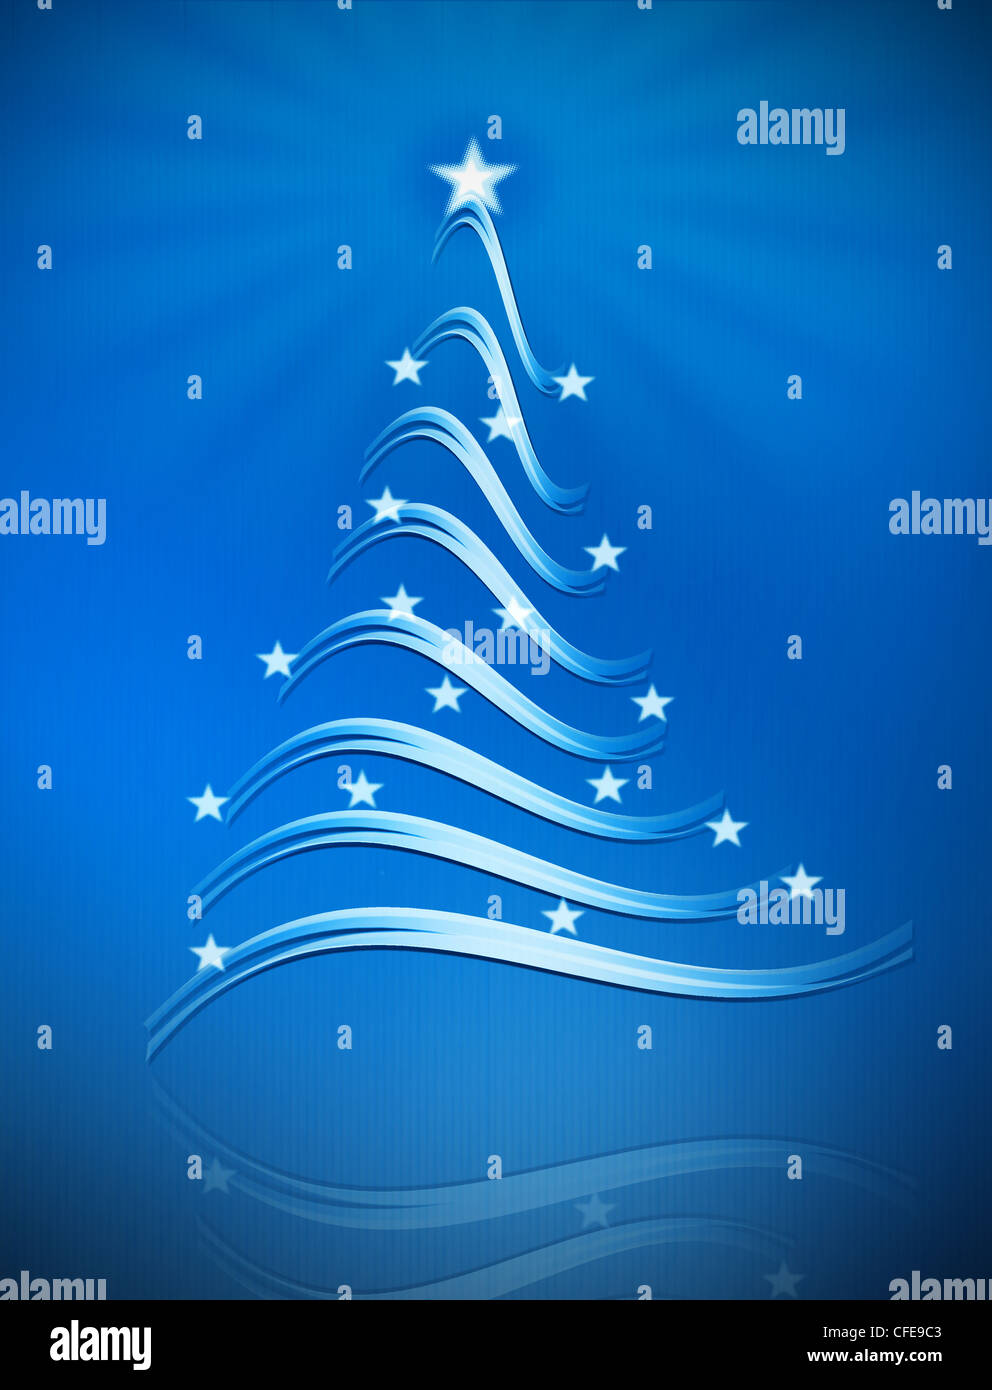 Christmas tree with stars on blue background digital illustration Stock Photo